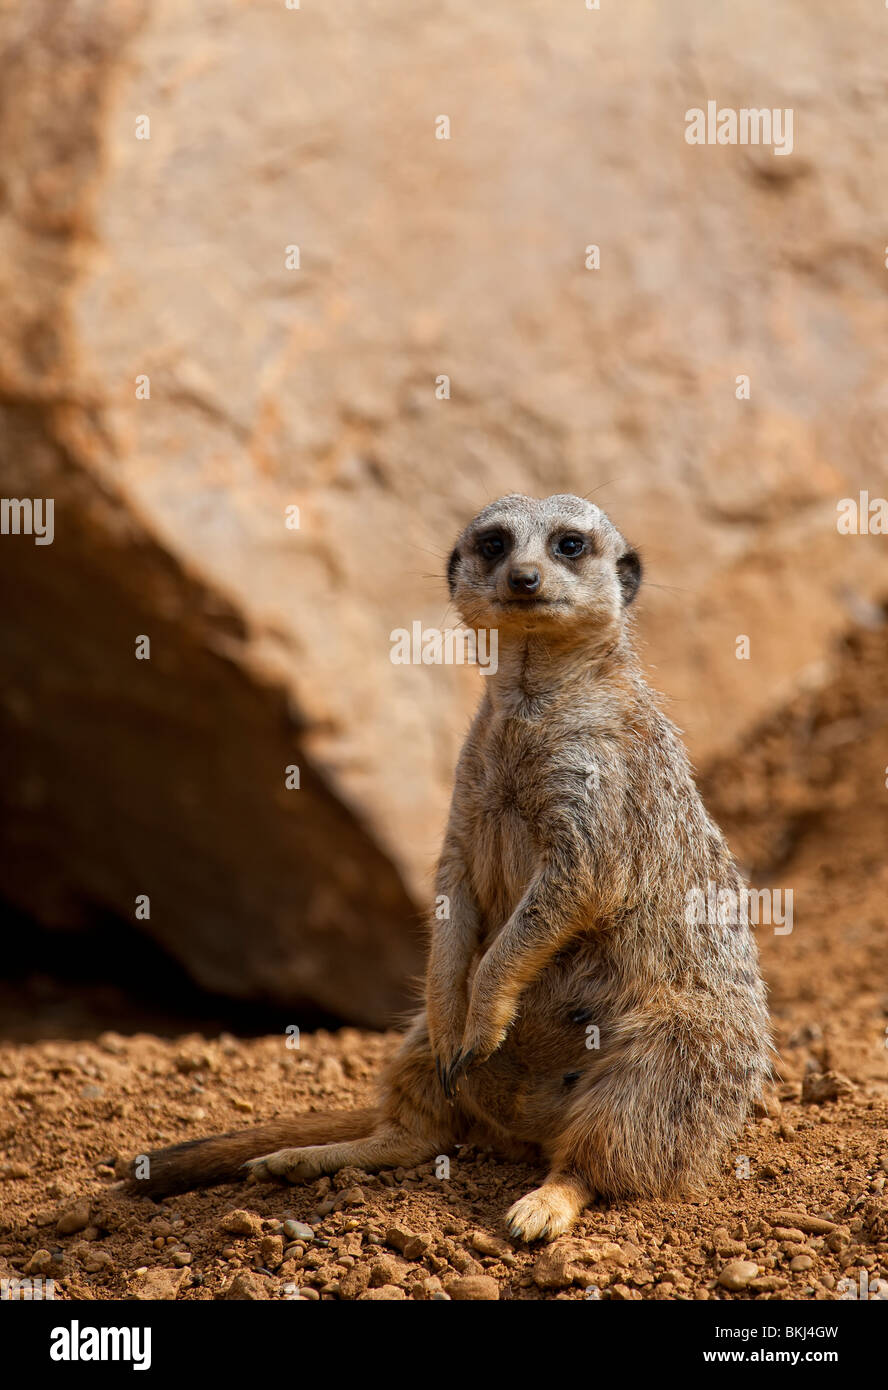 Meerkat or Suricate (Suricata suricatta) sitting and keeping watch Stock Photo